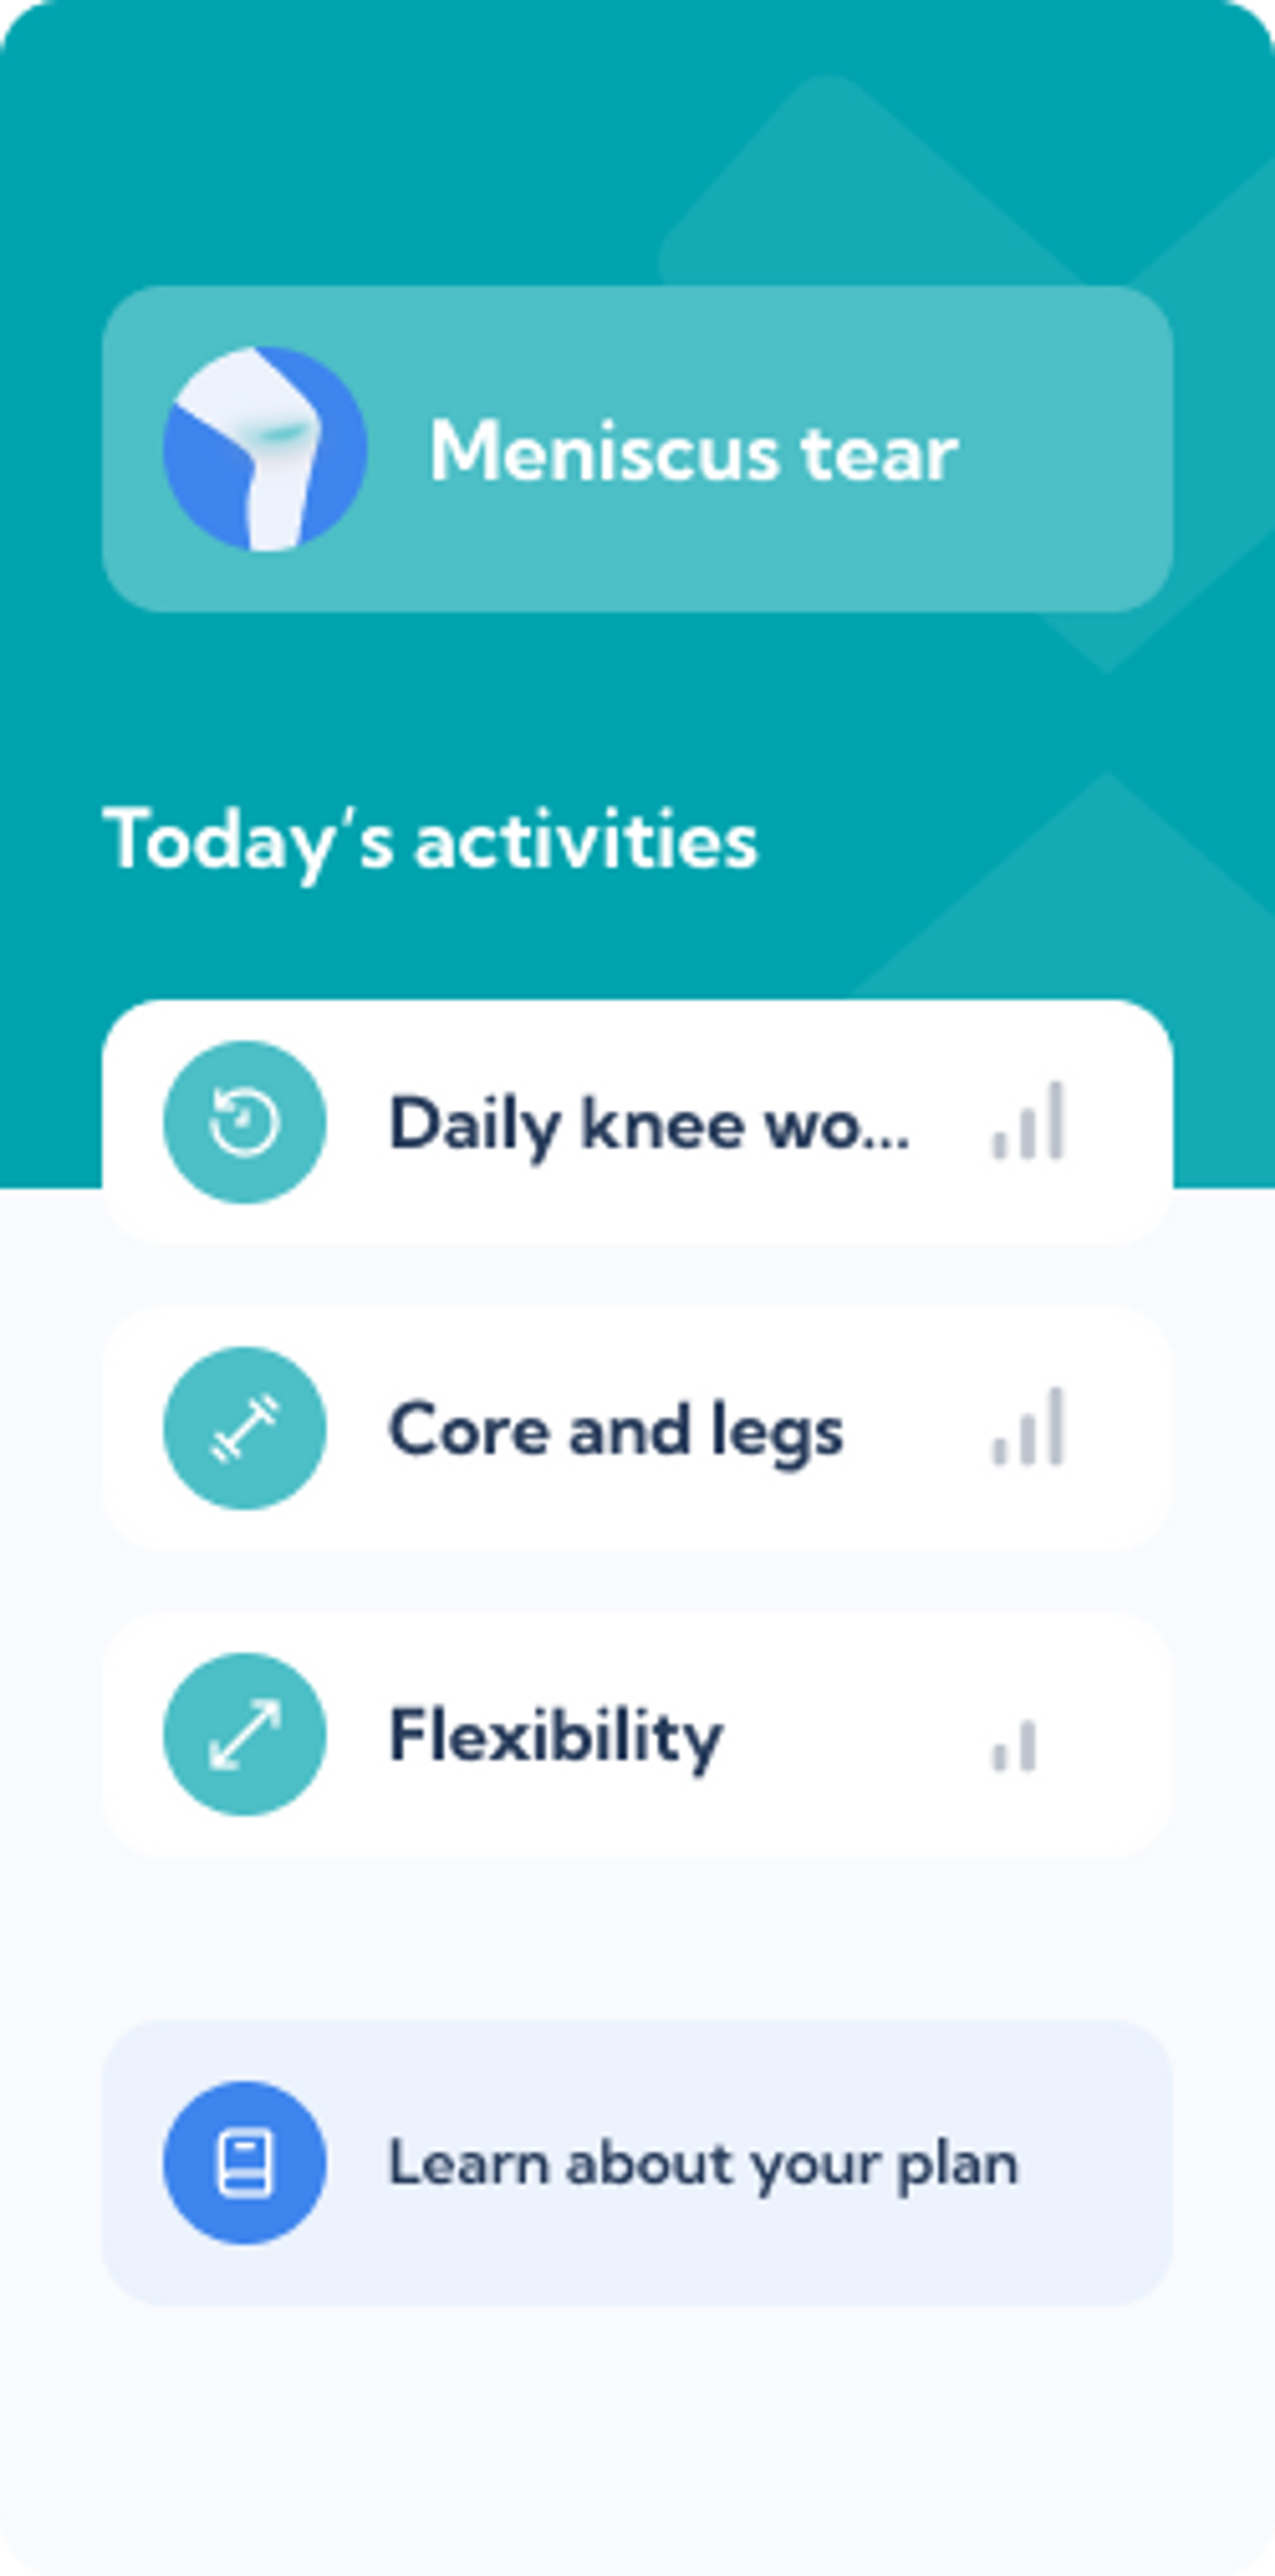 Meniscus tear rehab plan – Dashboard overview of the Exakt Health app